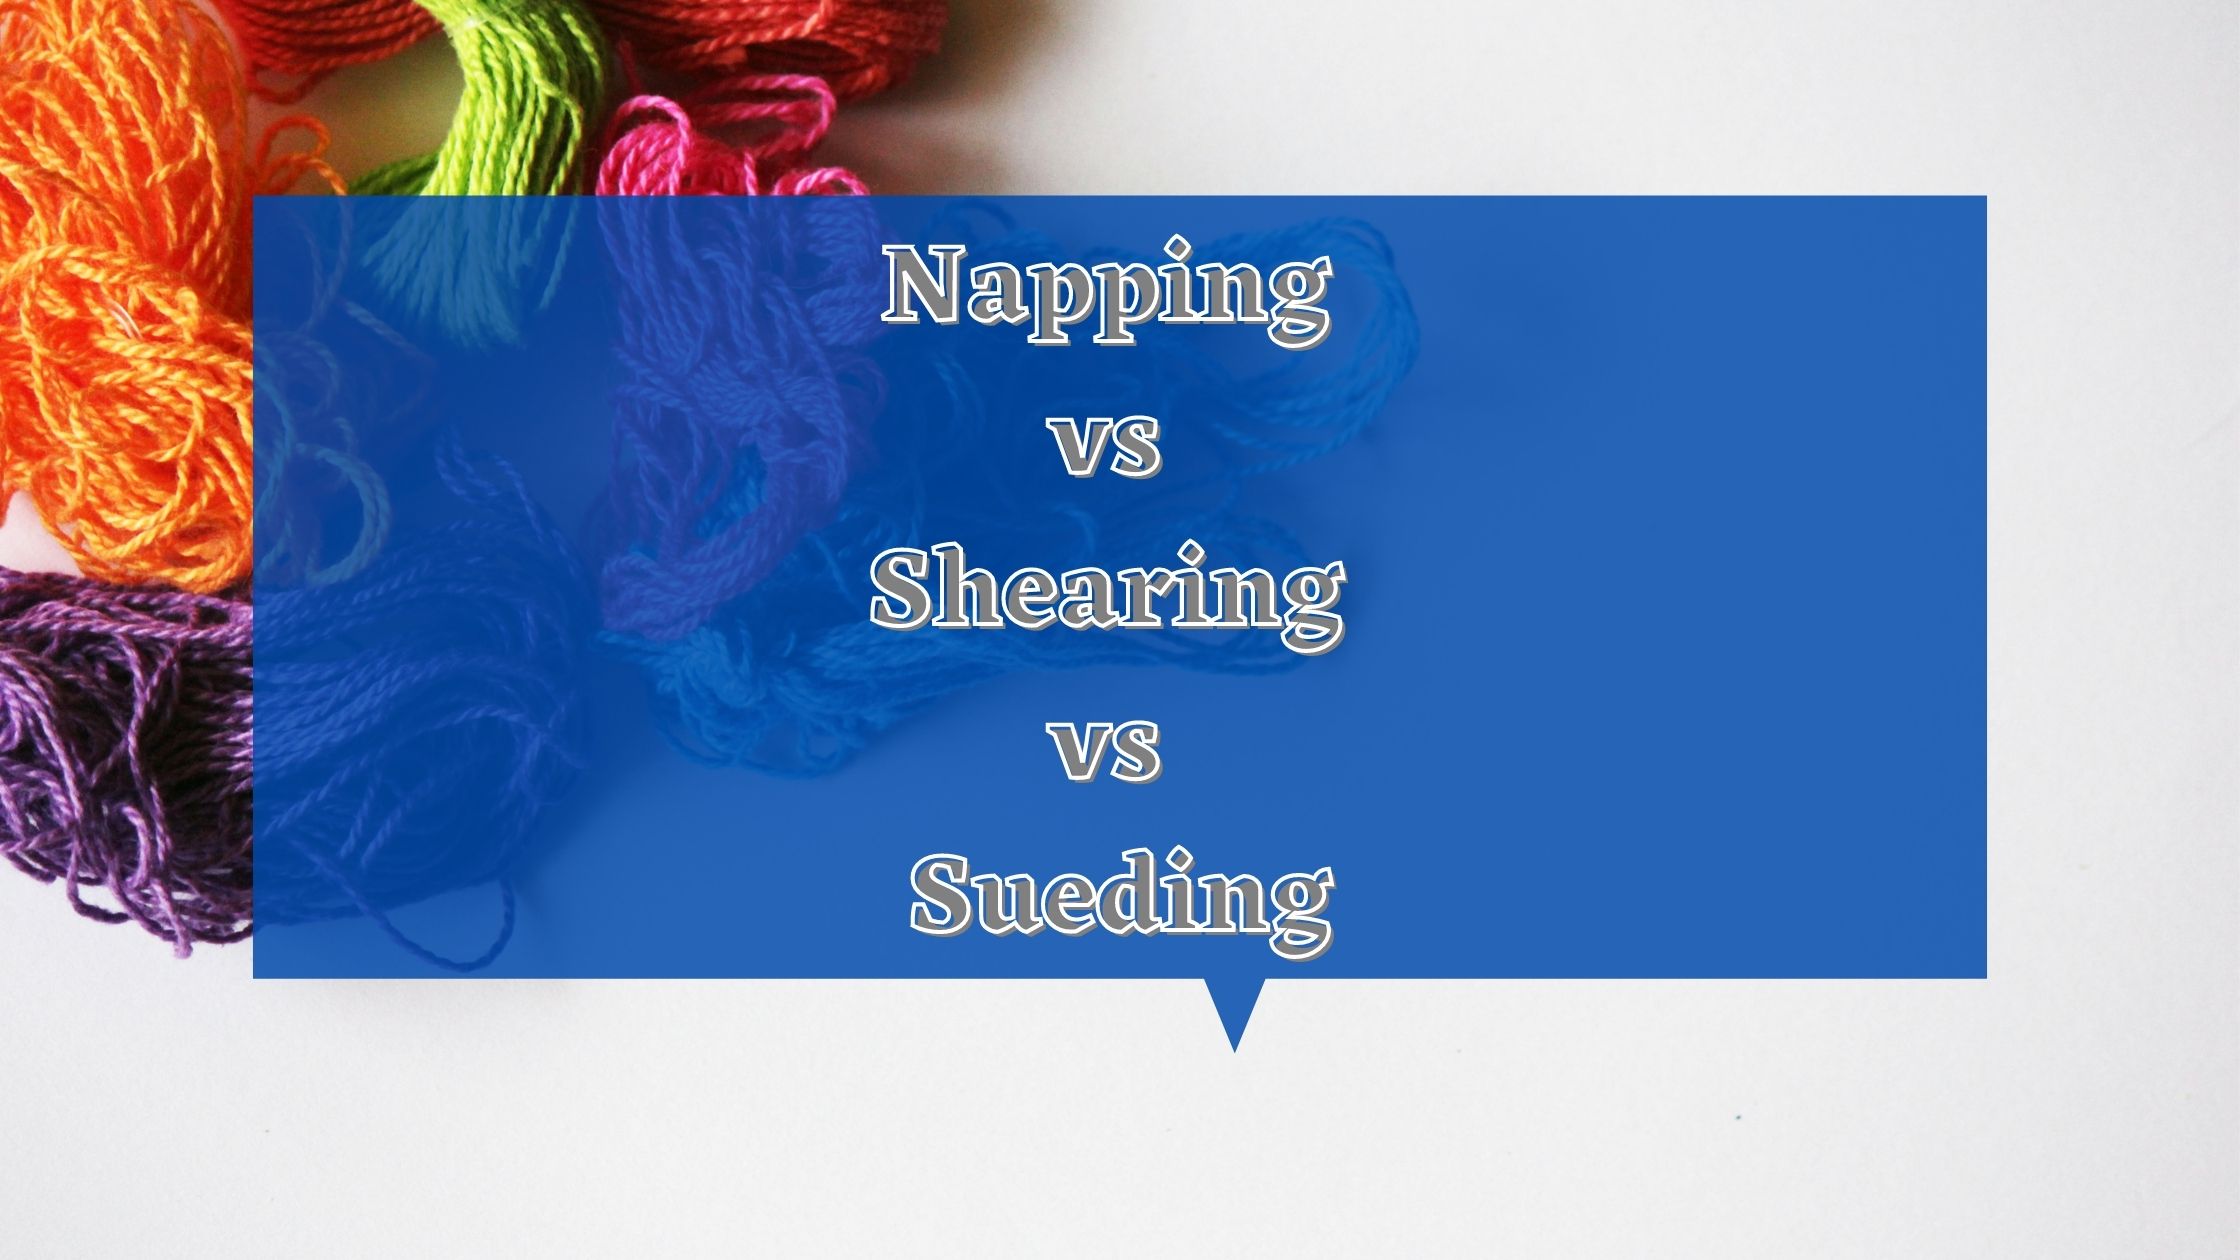 Napping vs Shearing vs Sueding